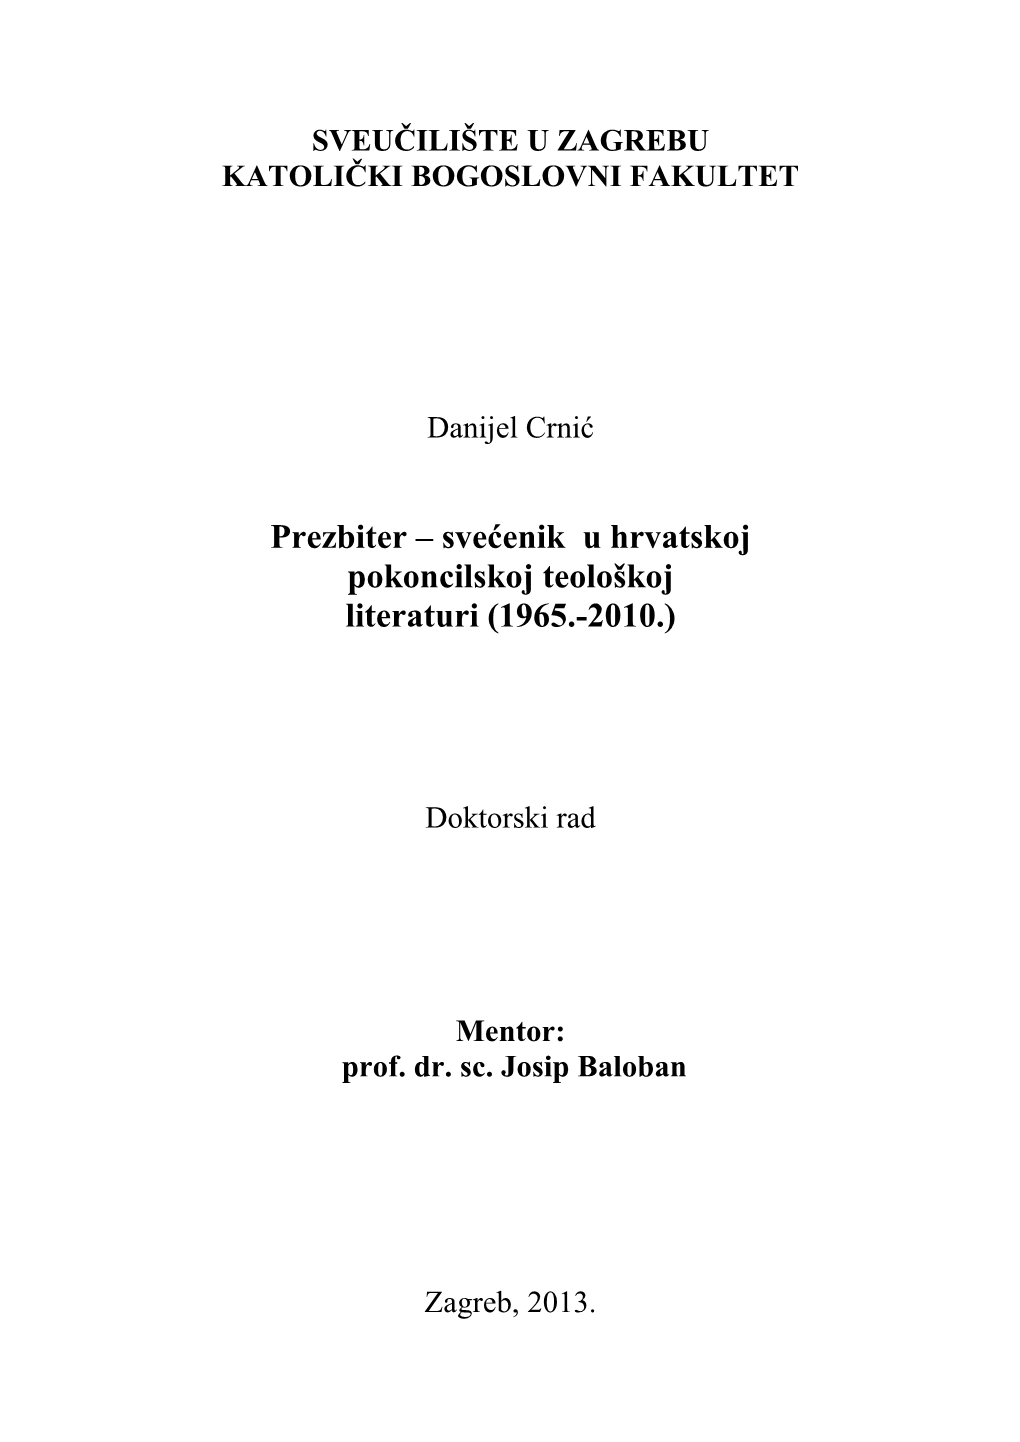 Prezbiter – Svećenik U Hrvatskoj Pokoncilskoj Teološkoj Literaturi (1965.-2010.)